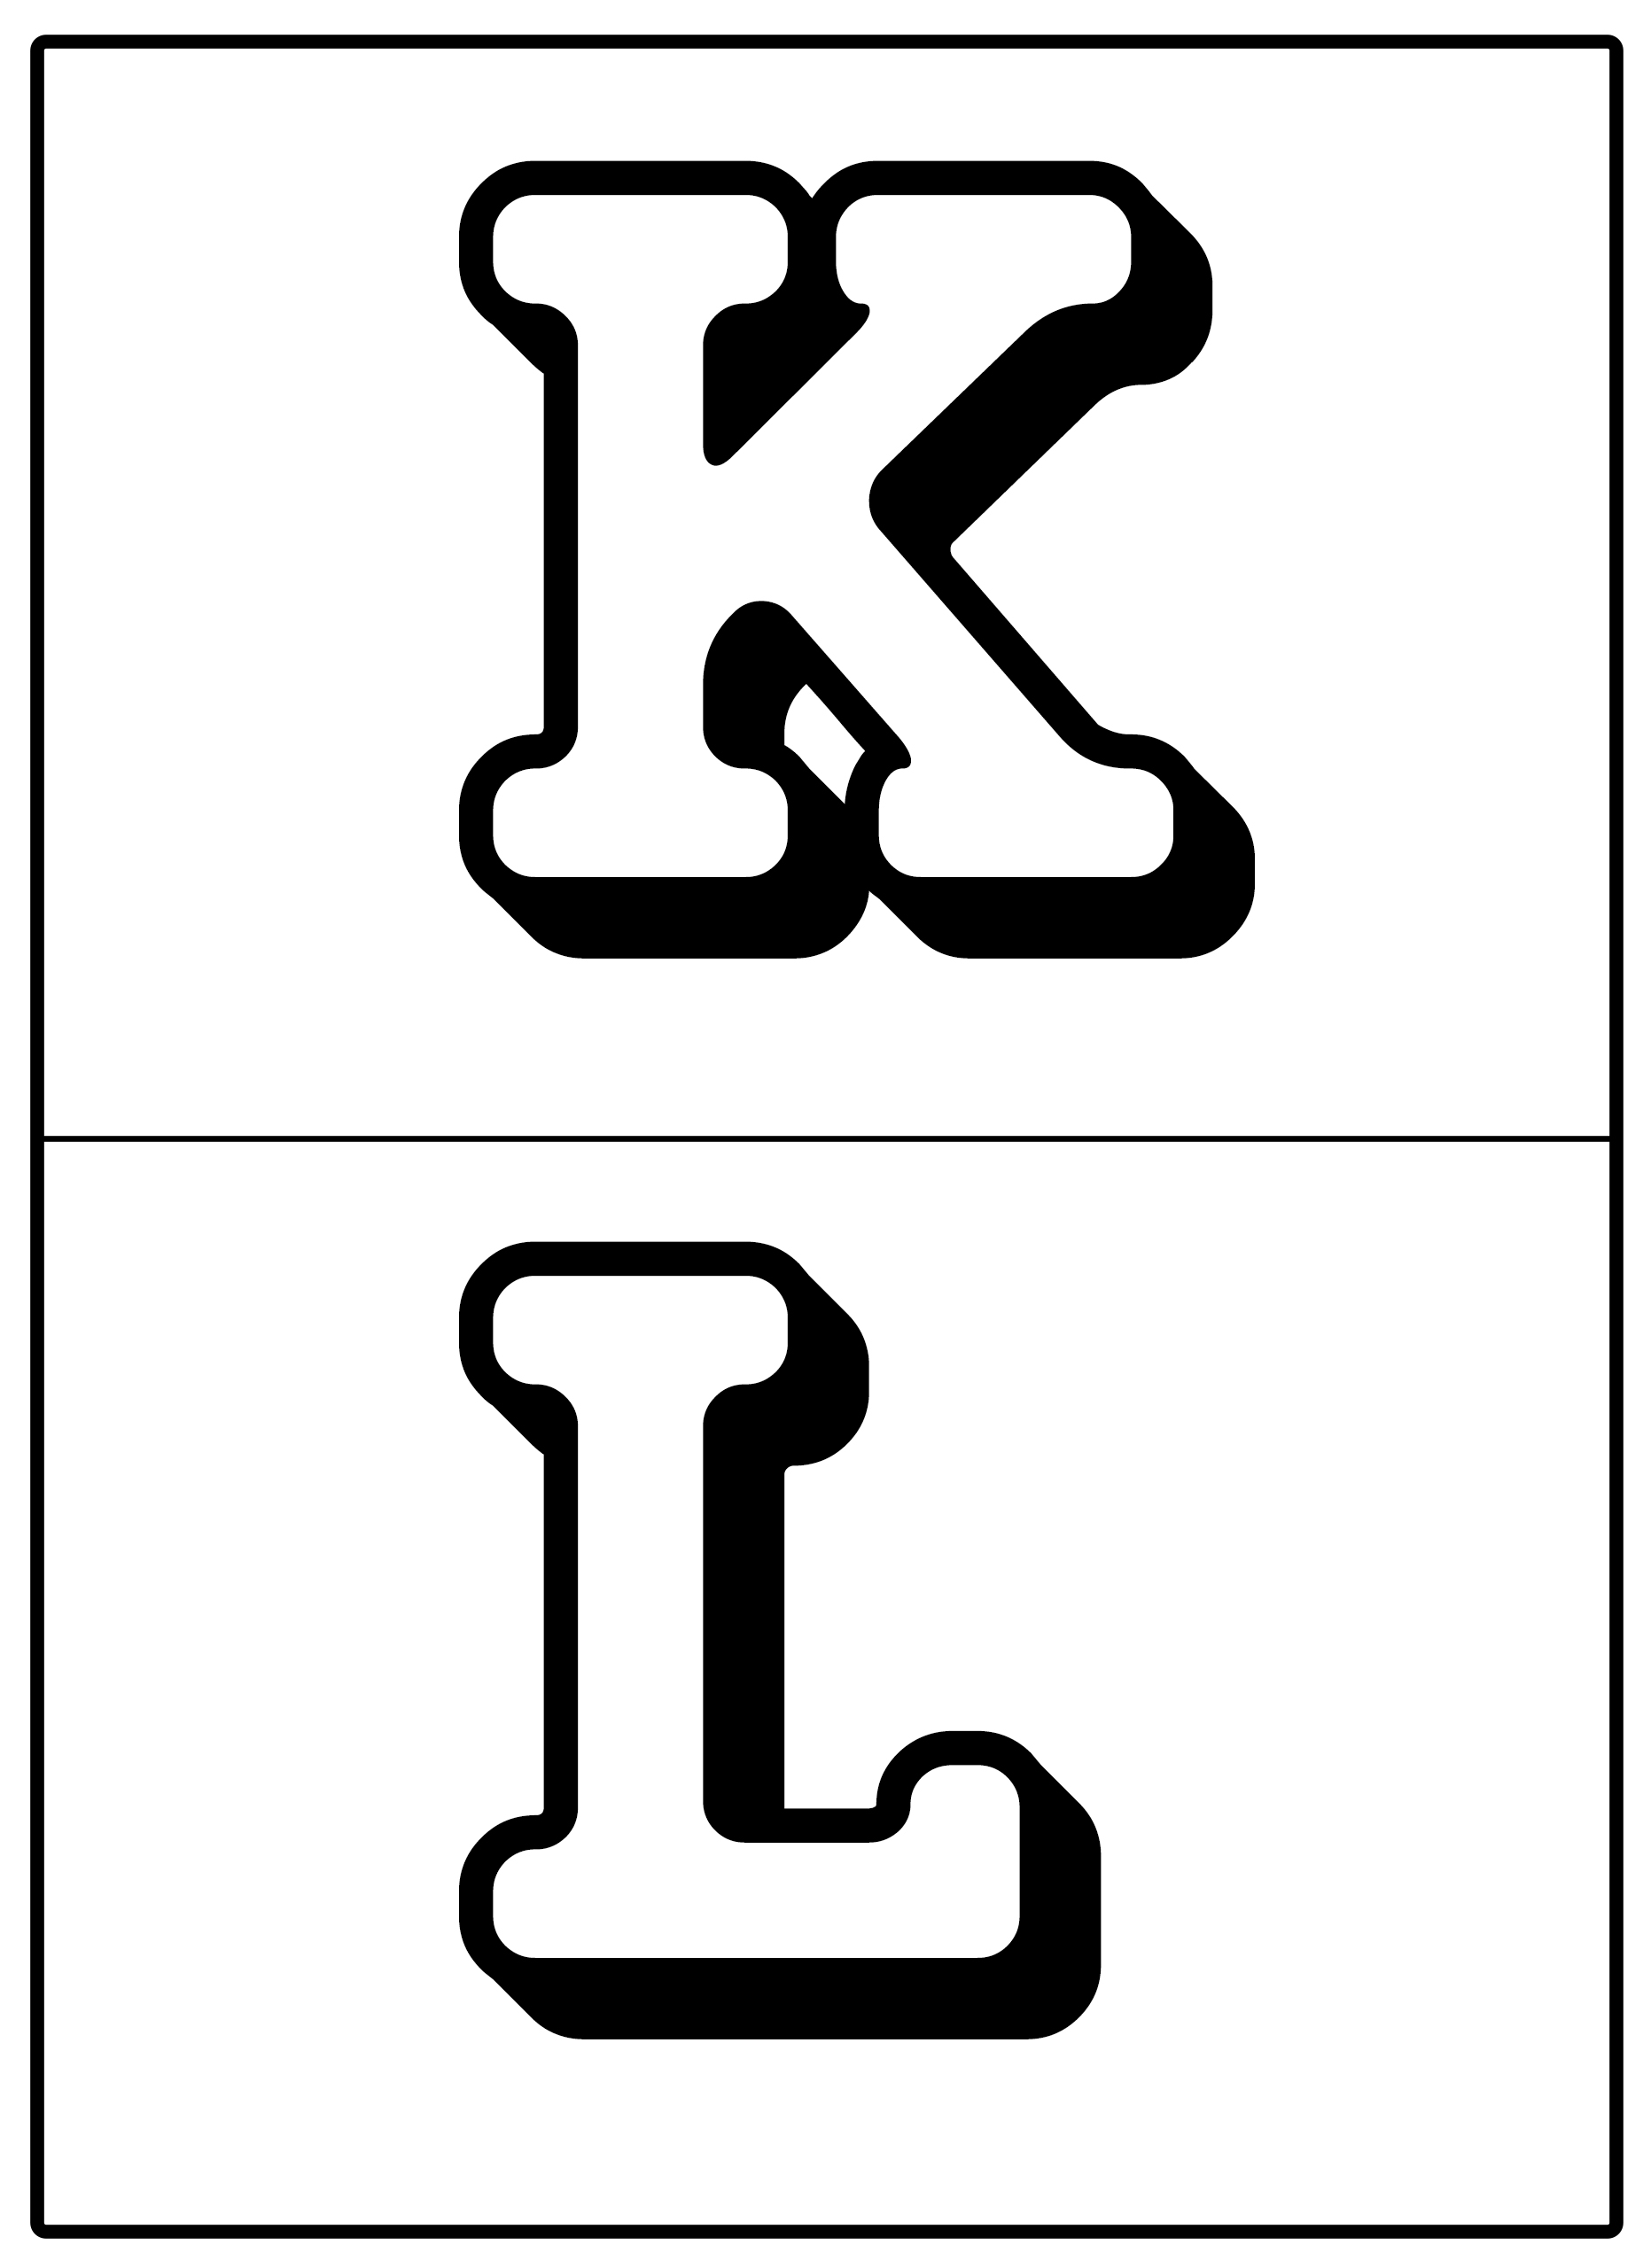 letras do alfabeto para imprimir